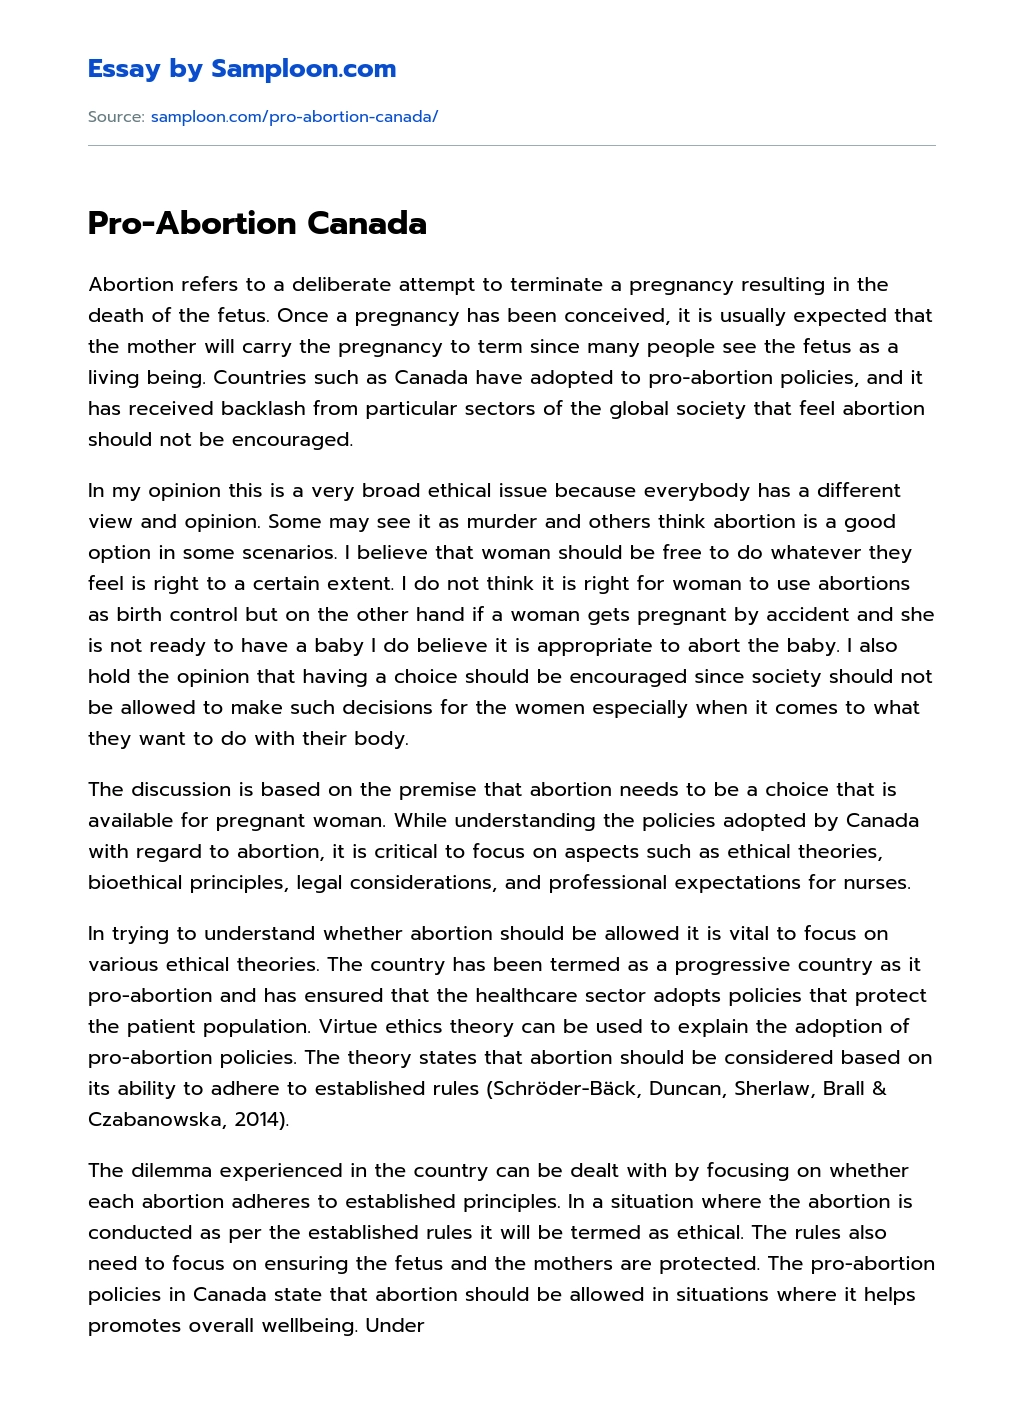 Pro-Abortion Canada essay